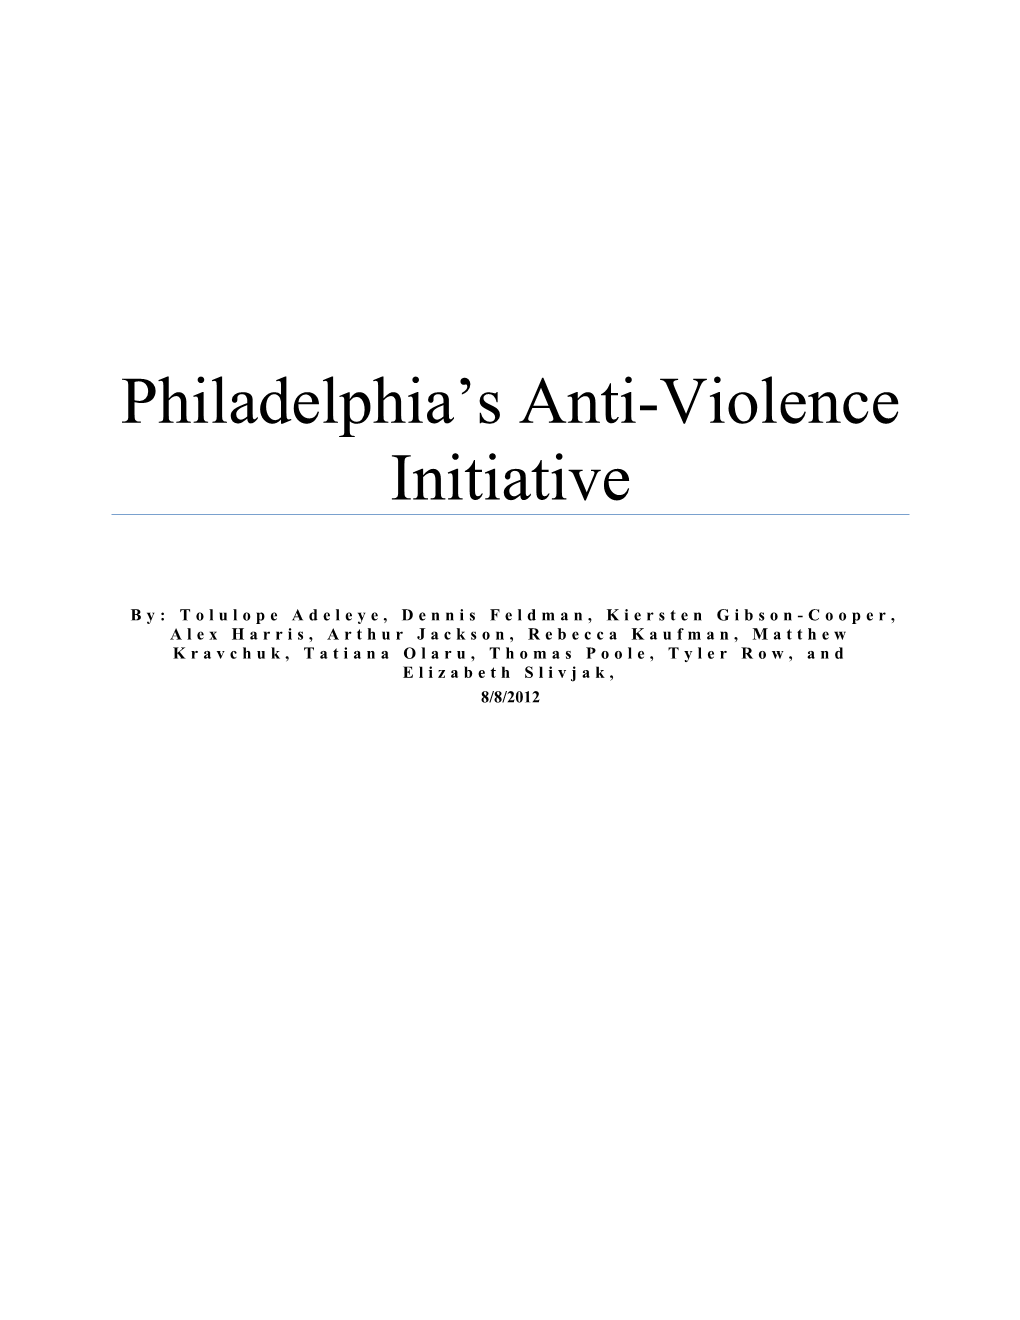 Philadelphia's Anti-Violence Initiative